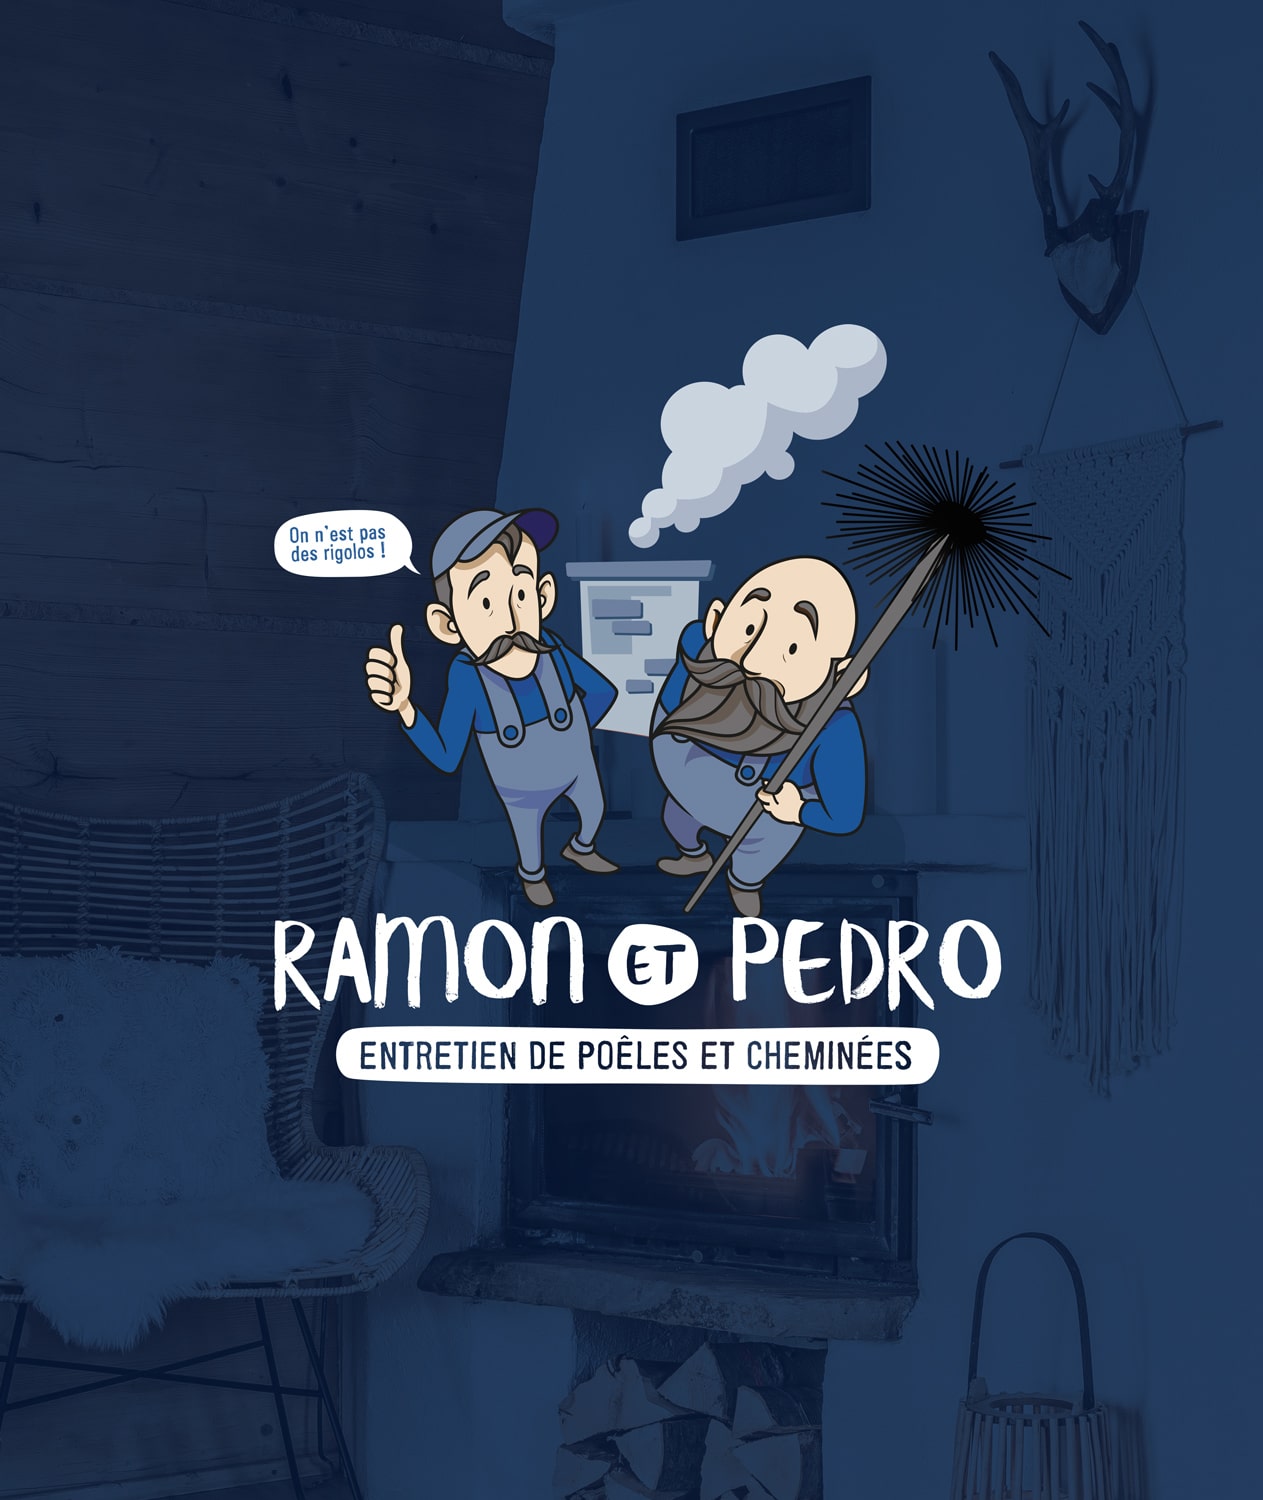 Ramon et Pedro branding